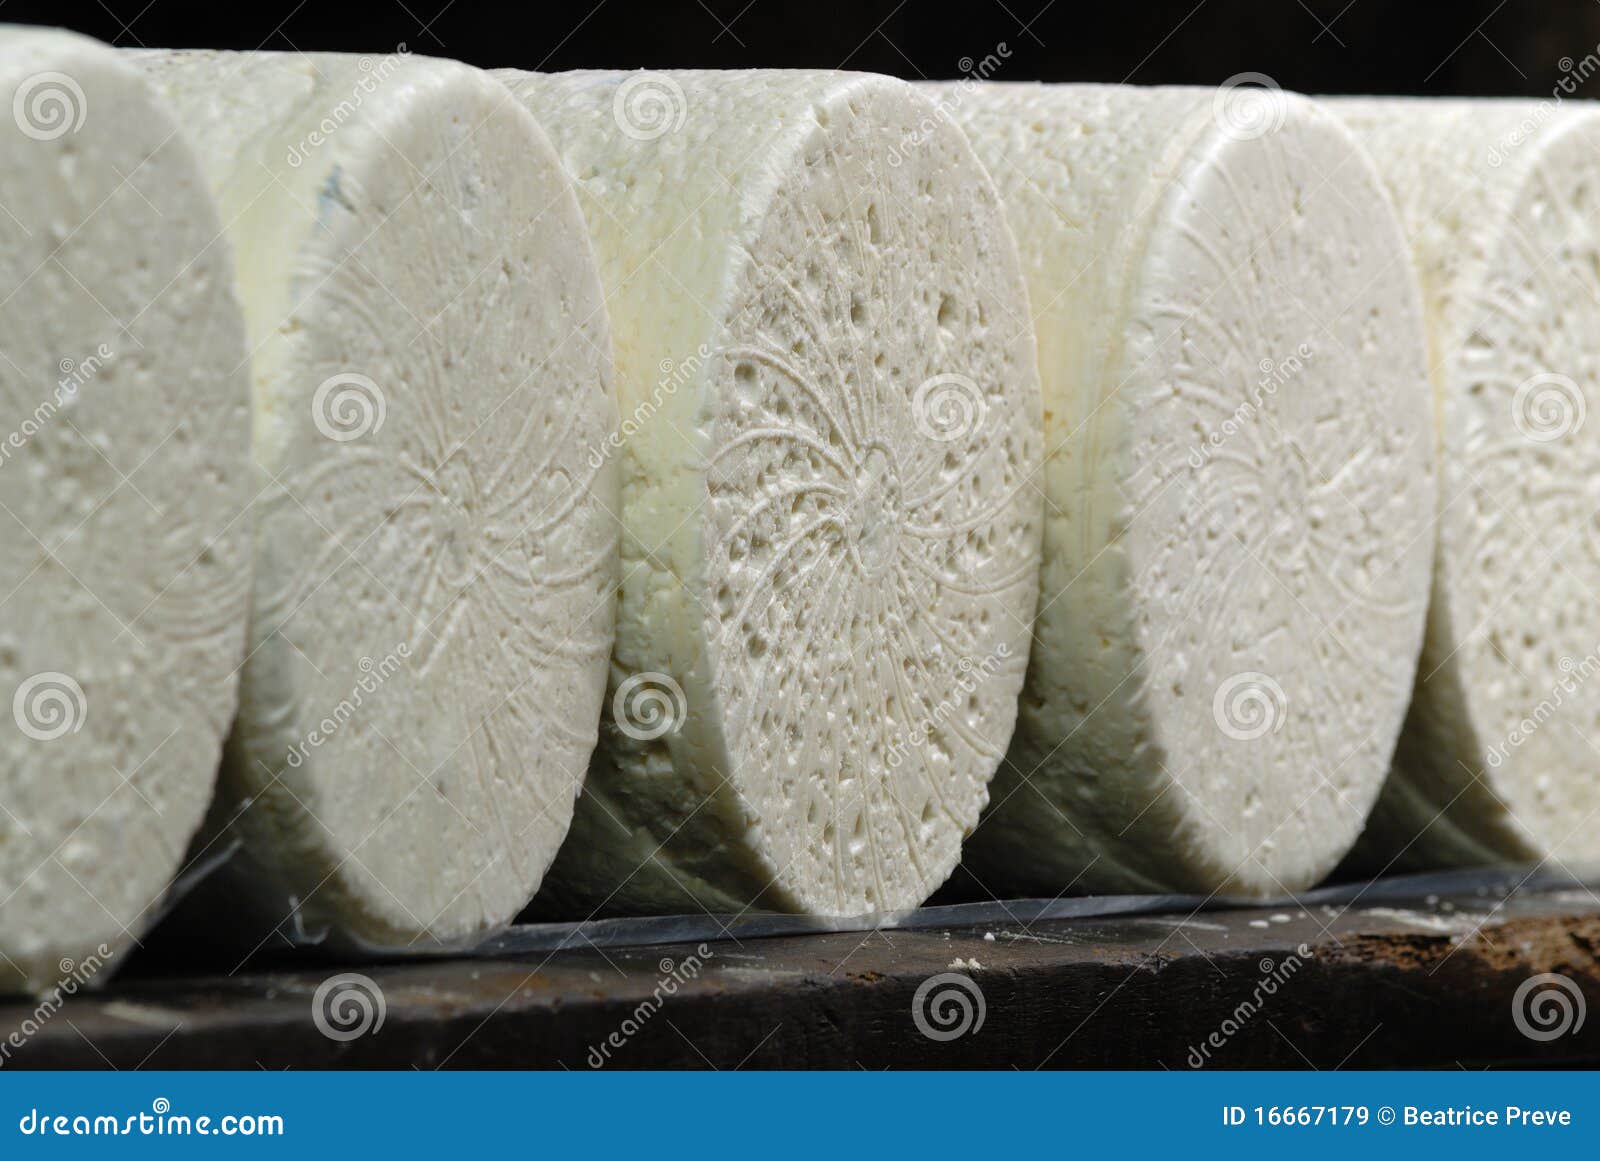 roquefort cheese in refining